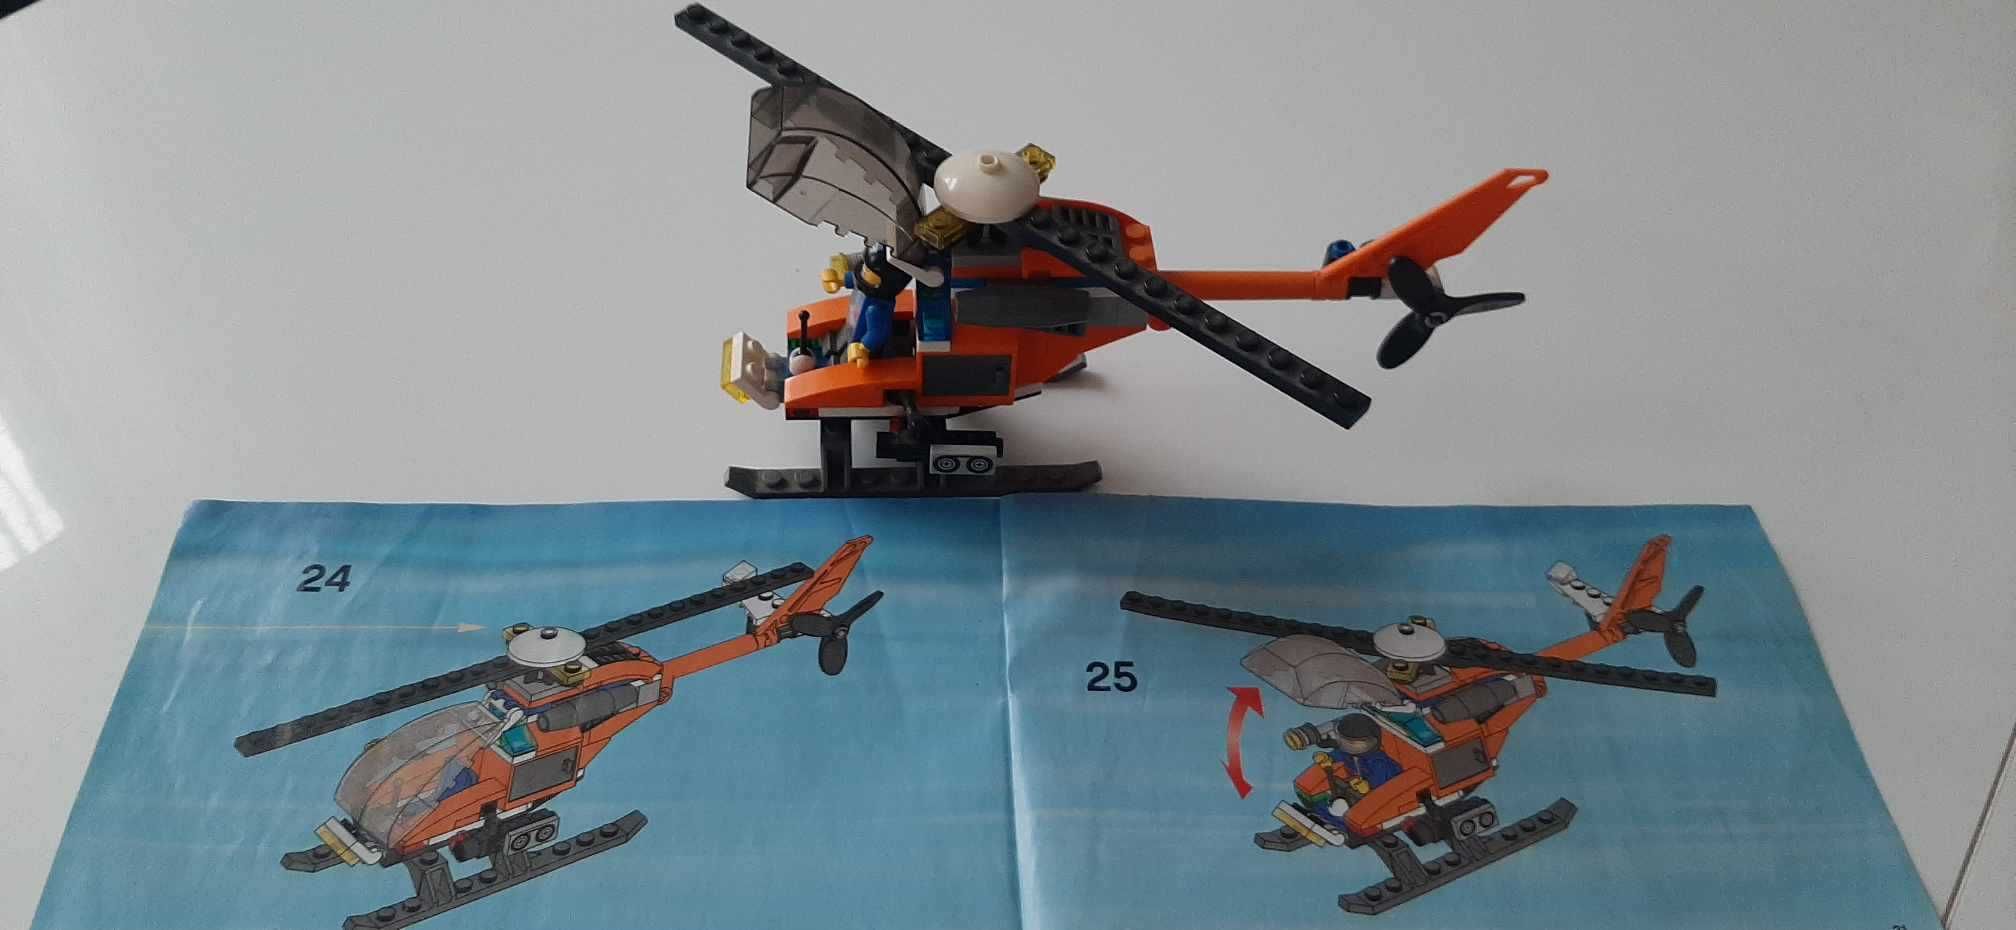 Lego city zestaw 7686